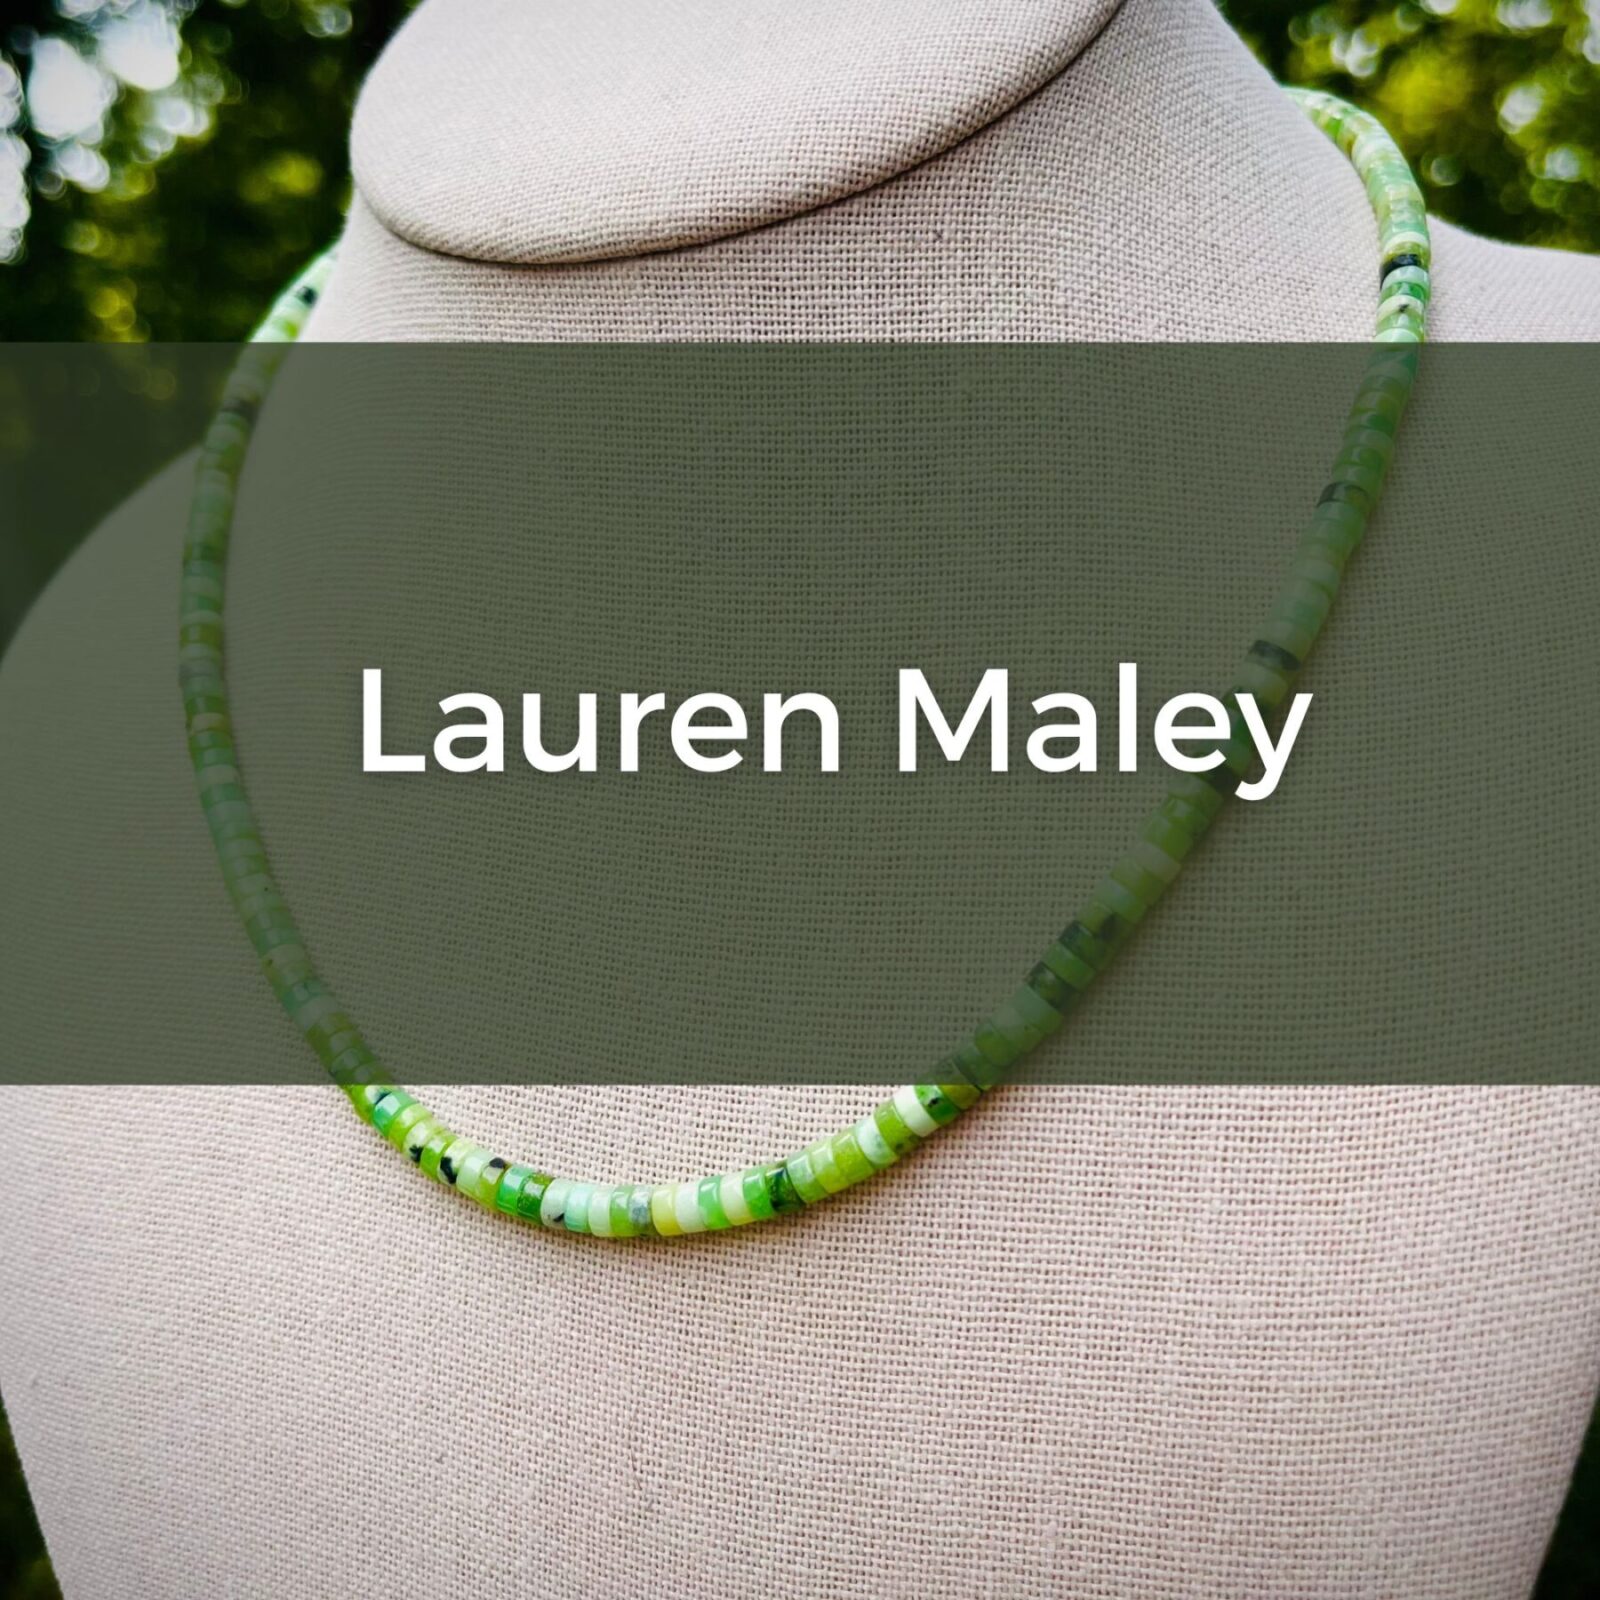 Lauren Maley, jewelry